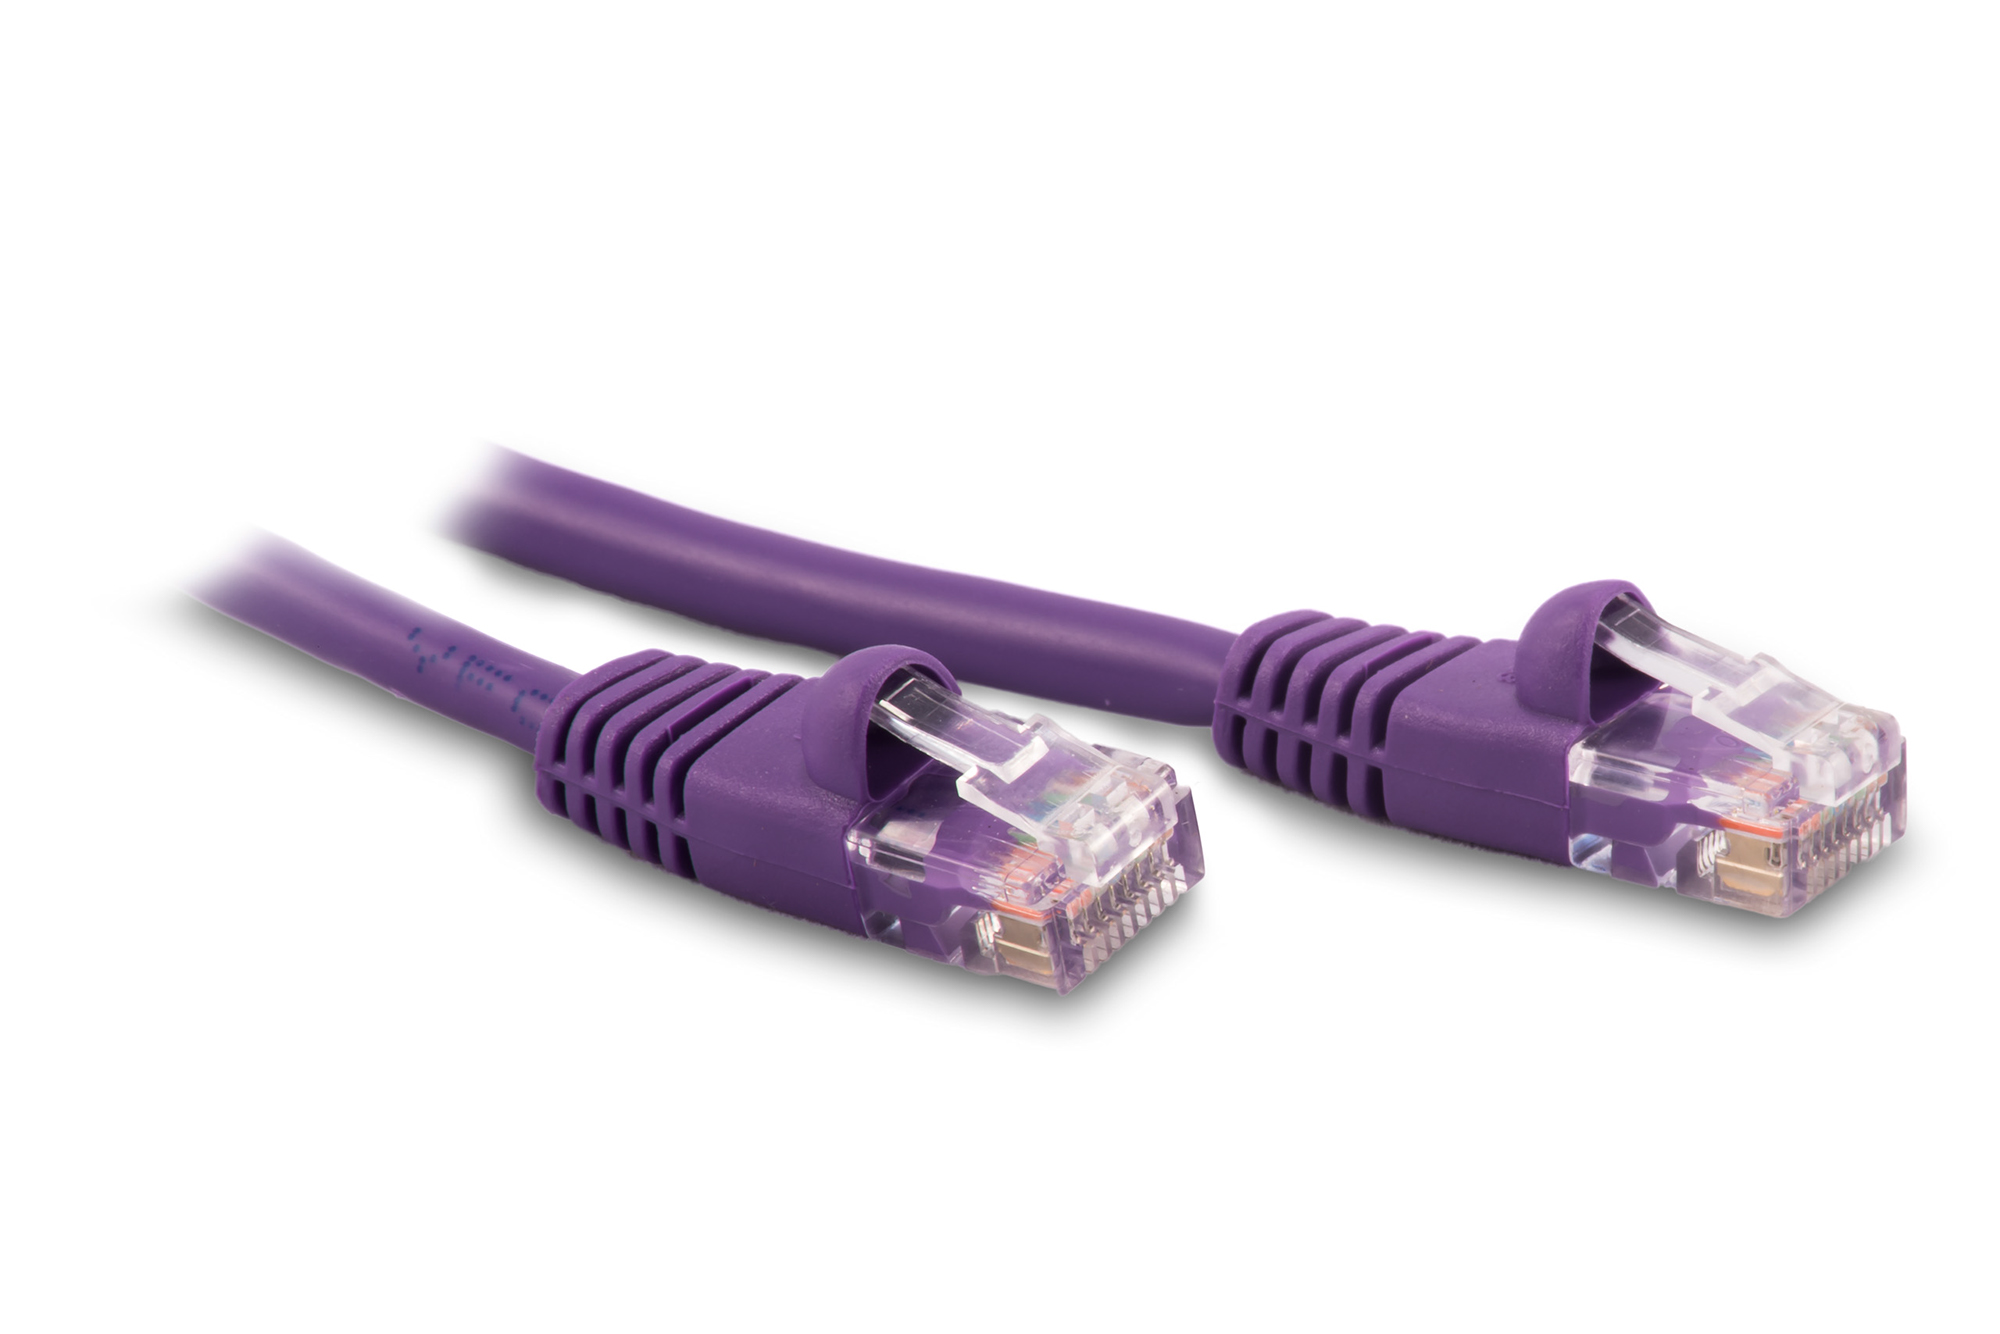 5ft Cat5e Ethernet Patch Cable - Violet Color - Snagless Boot, Stranded, RJ45, 350Mhz, 24AWG